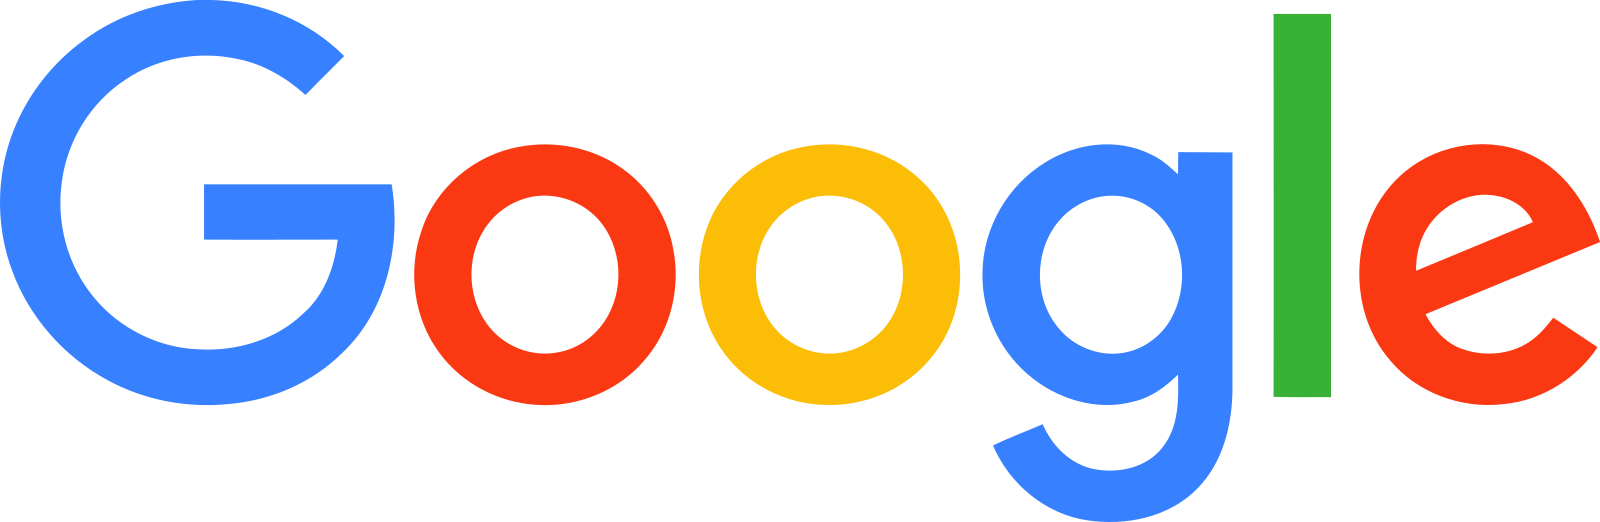 Uploads Google Logo 2